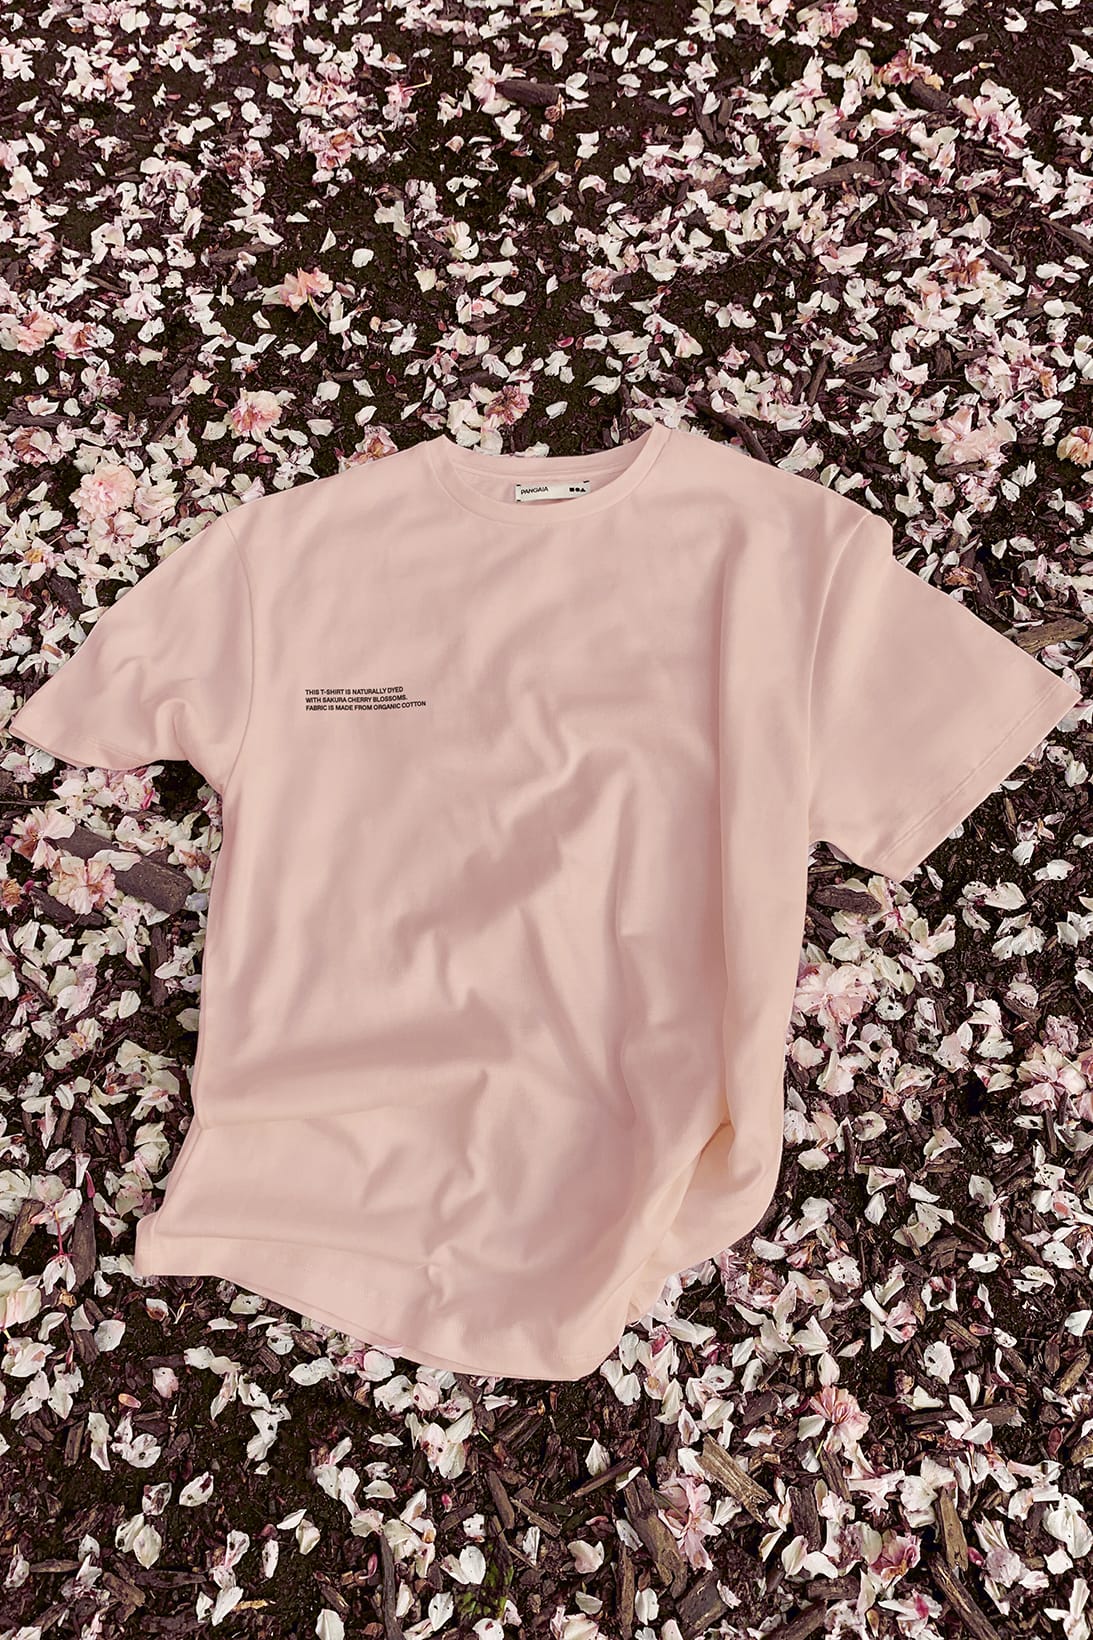 nike cherry blossom t shirt